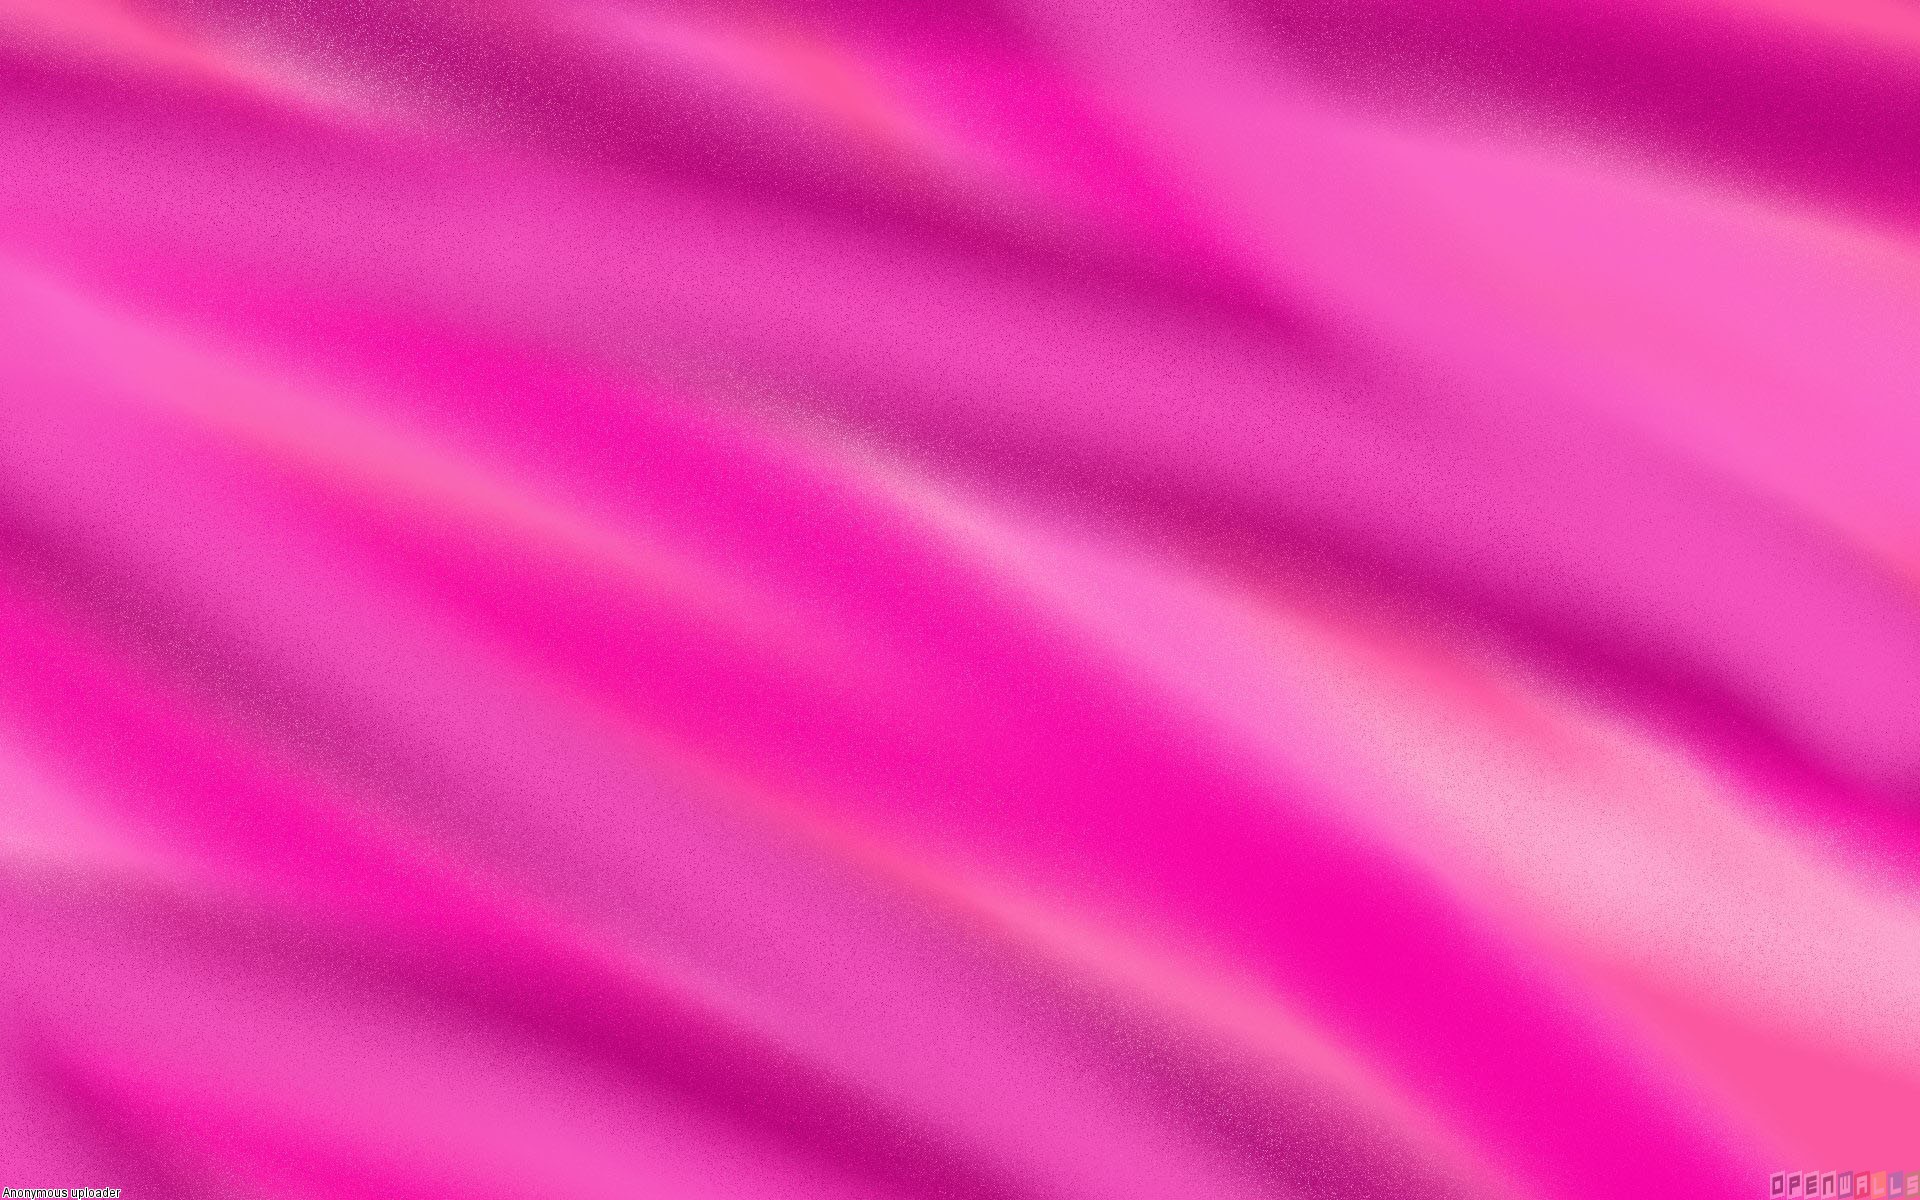 Background Image Pink Image Wallpaper